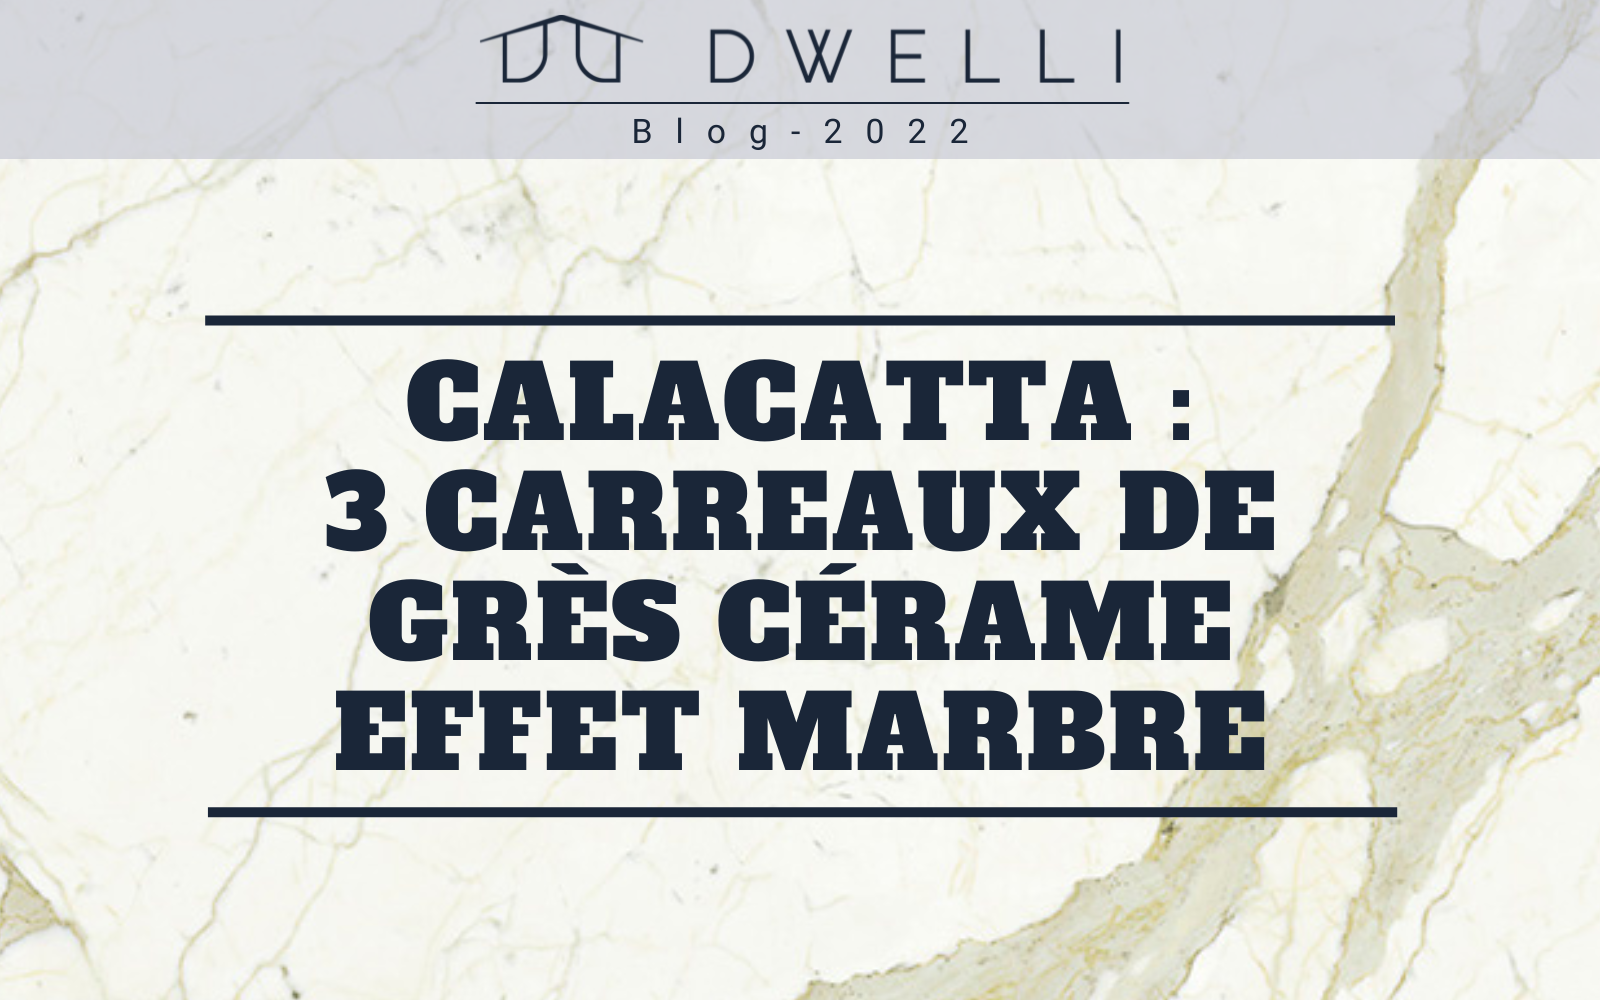 Calacatta: 3 carreaux de grès cérame effet marbre